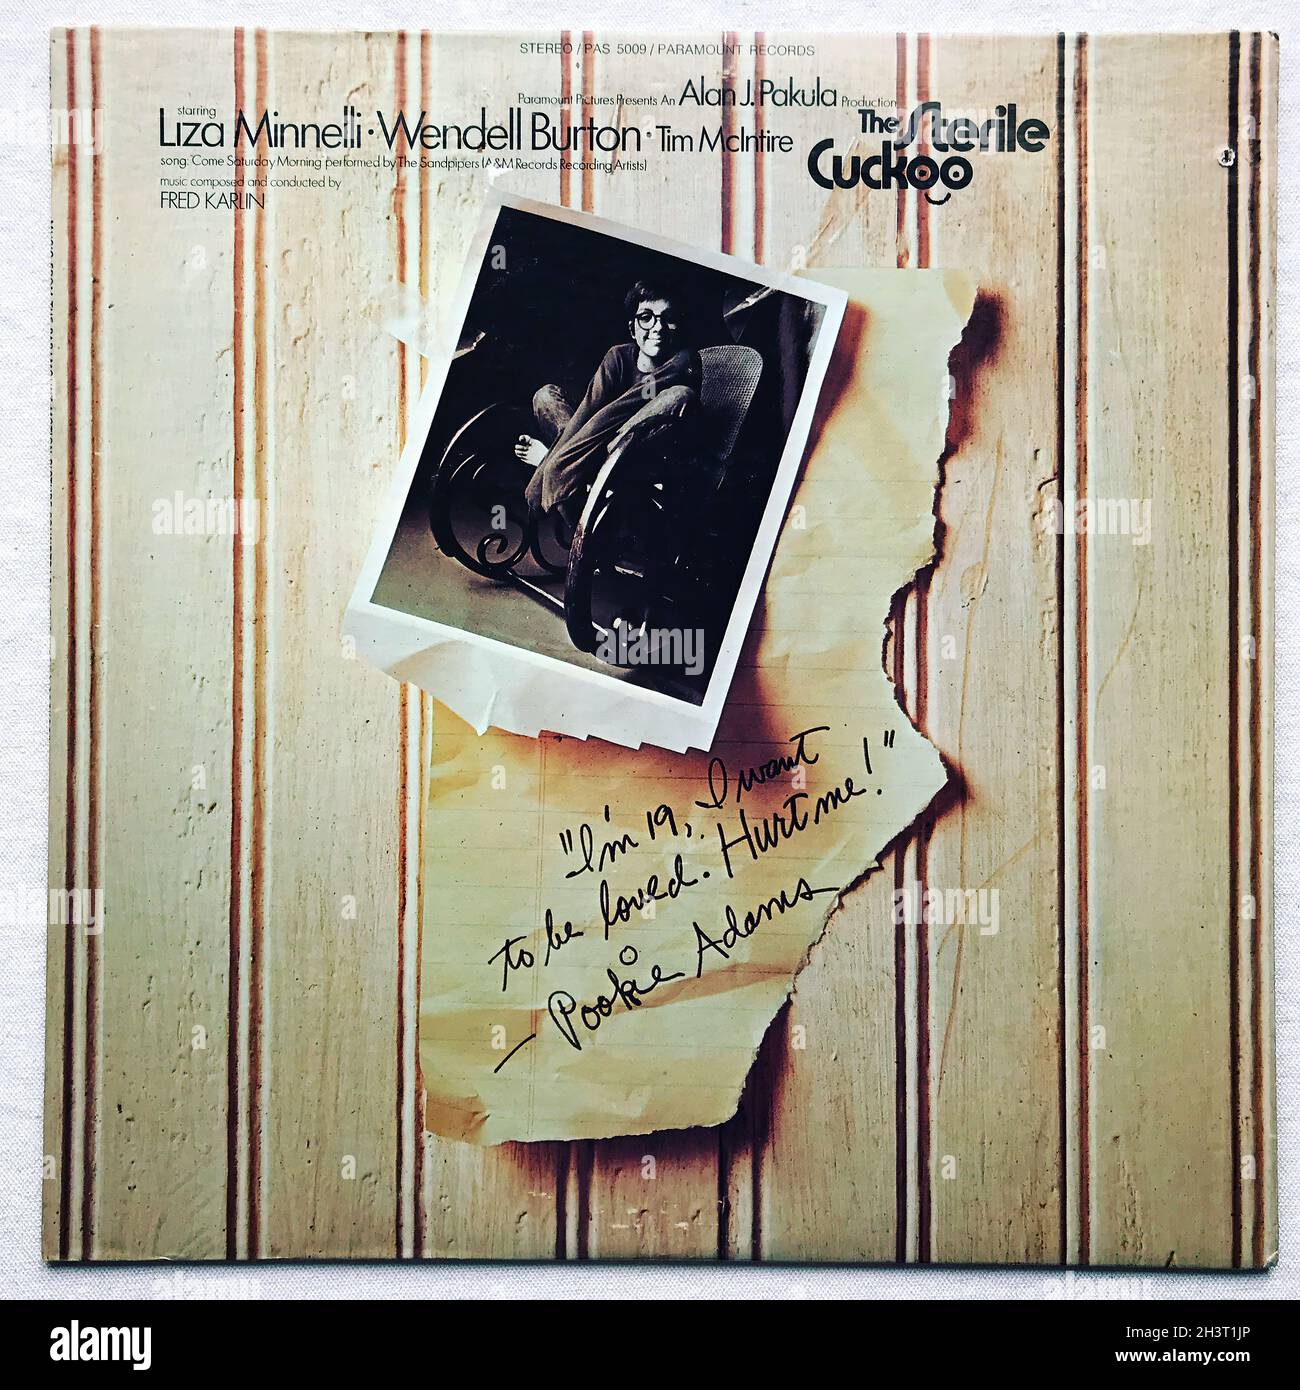 The Sterile Cuckoo (1969) Lp - Original Vinyl Record Stock Photo